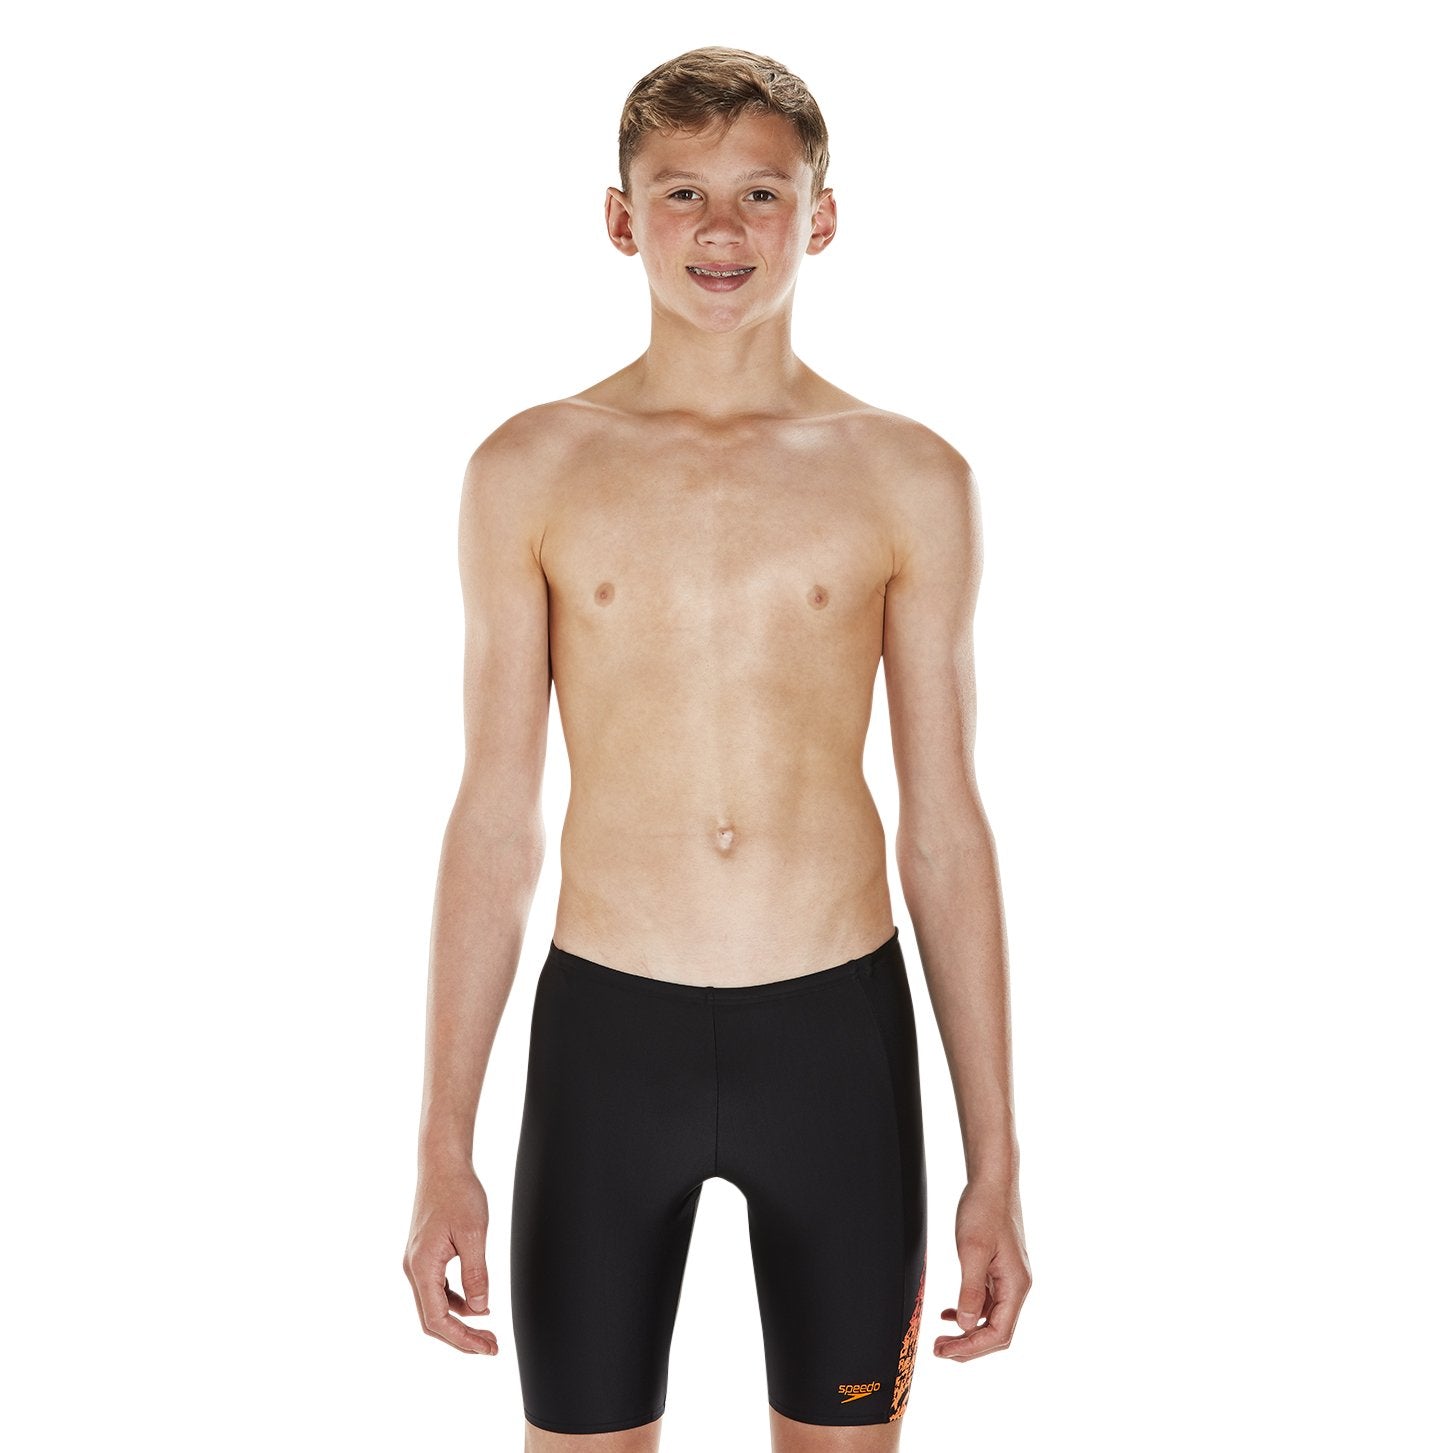 Speedo Boys Swimwear Light Spritz Jammer - Best Price online Prokicksports.com